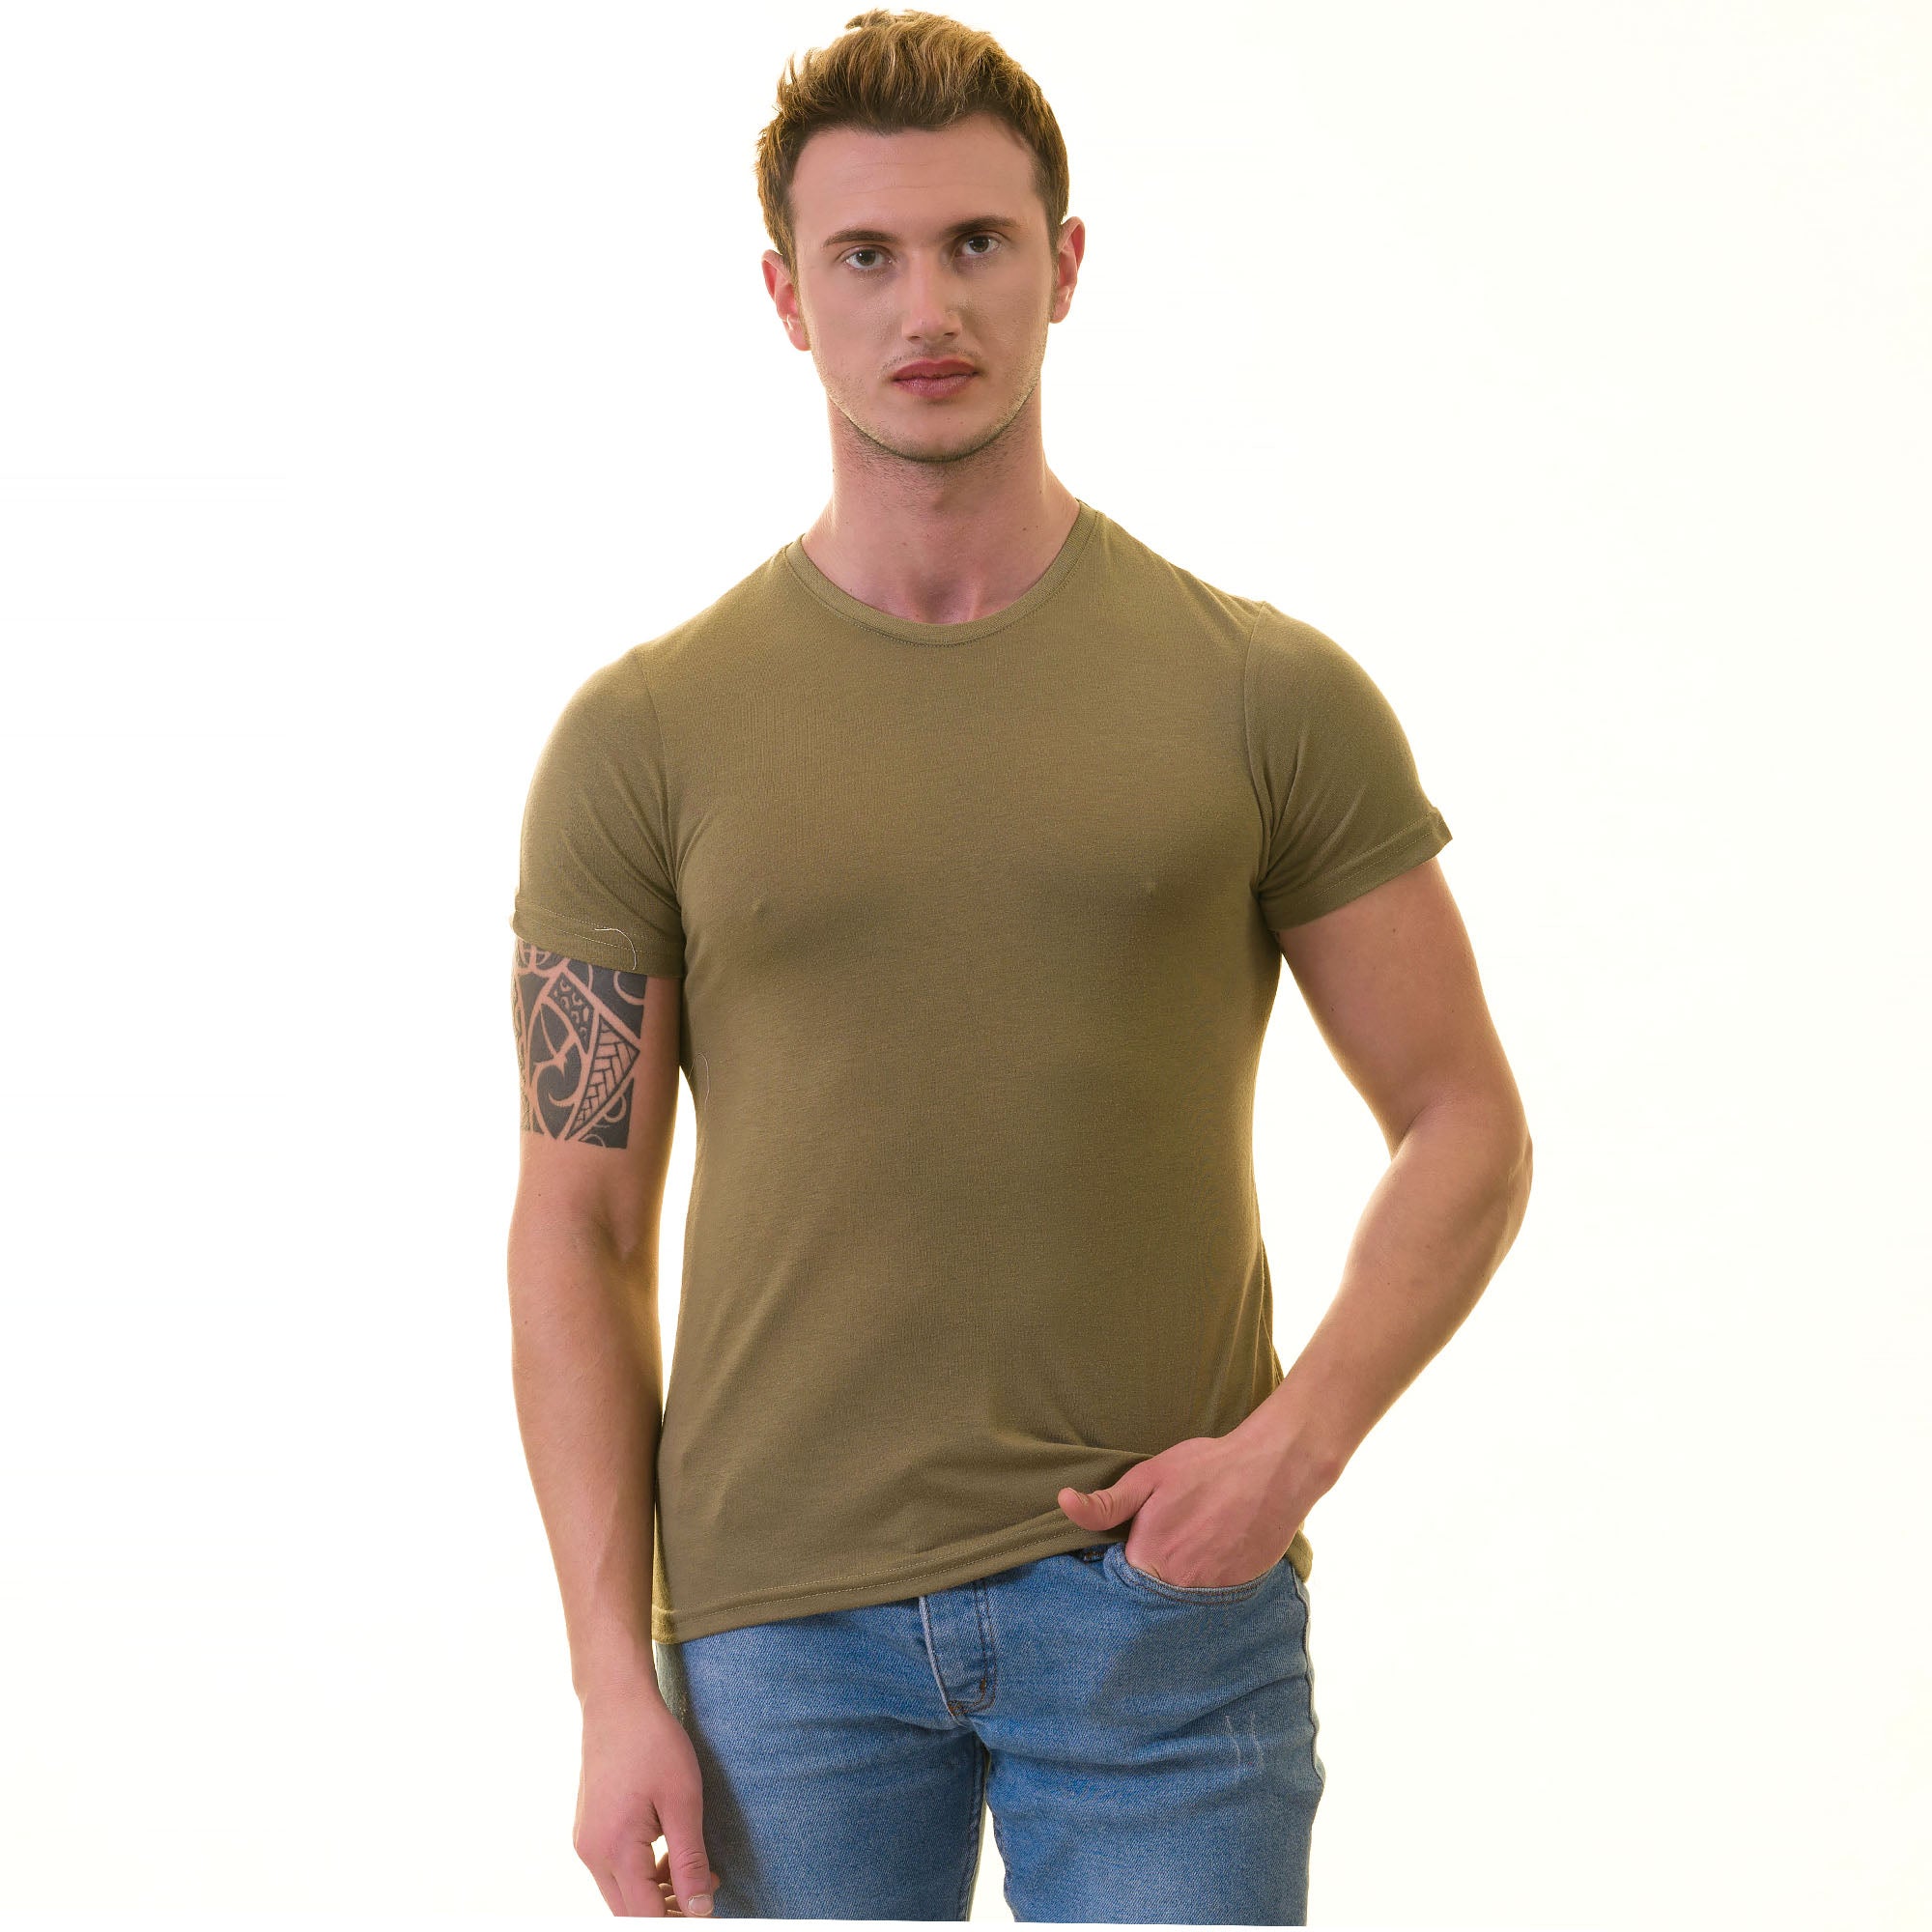 Olive European Made & Designed Premium Quality T-Shirt - Crew Neck Short Sleeve T-Shirts